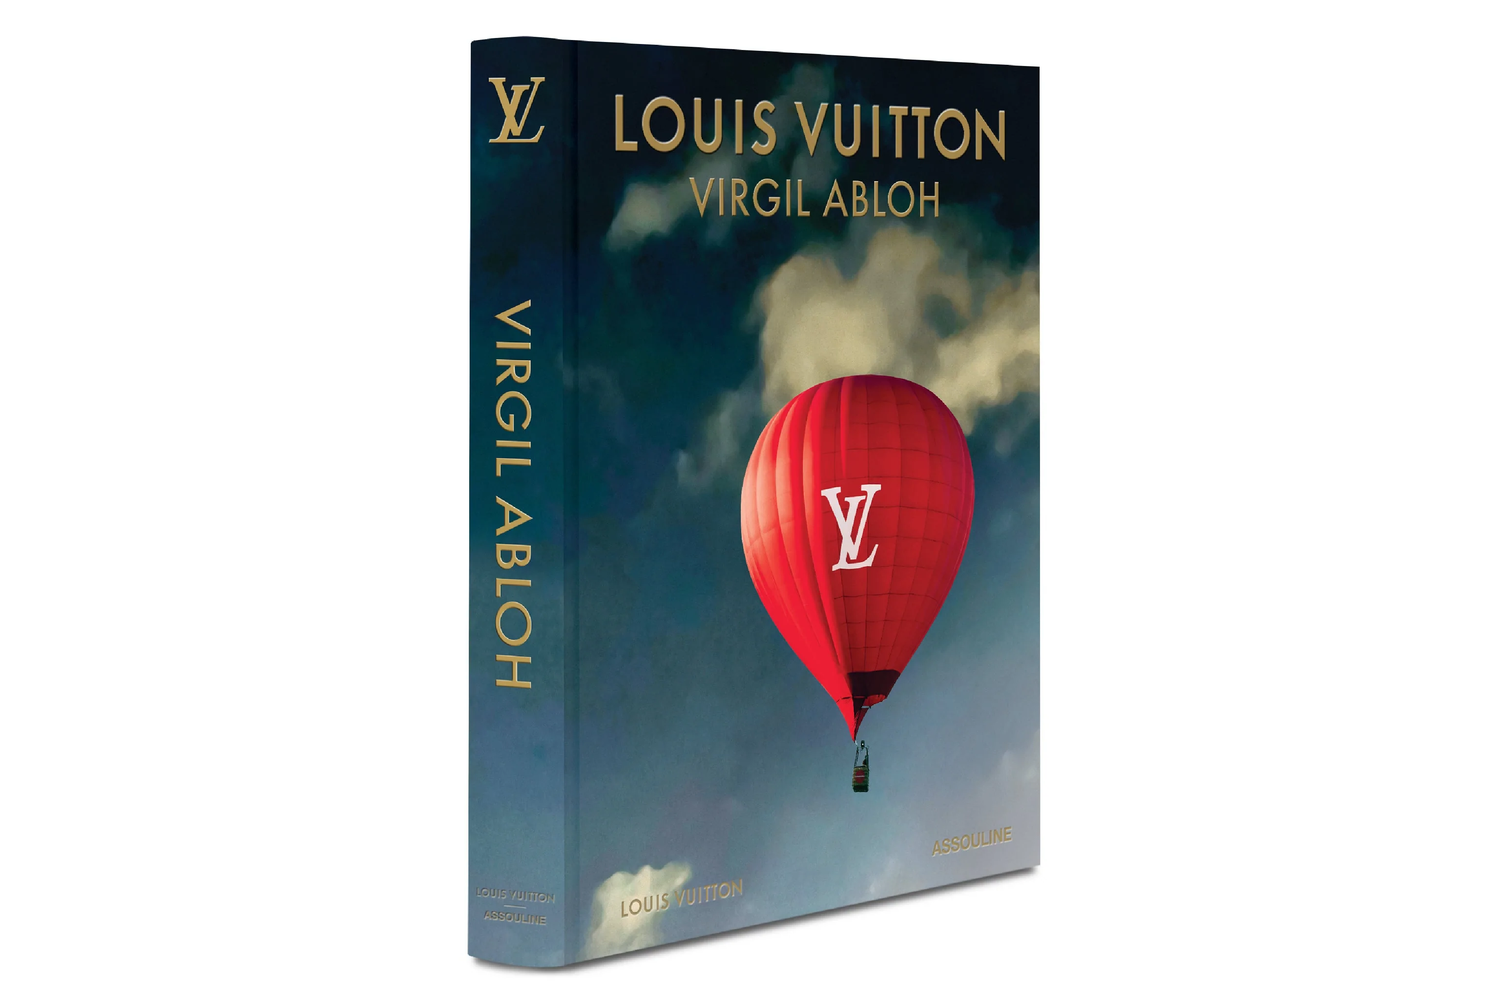 Louis Vuitton Duvet Cover For Sale In Ghana